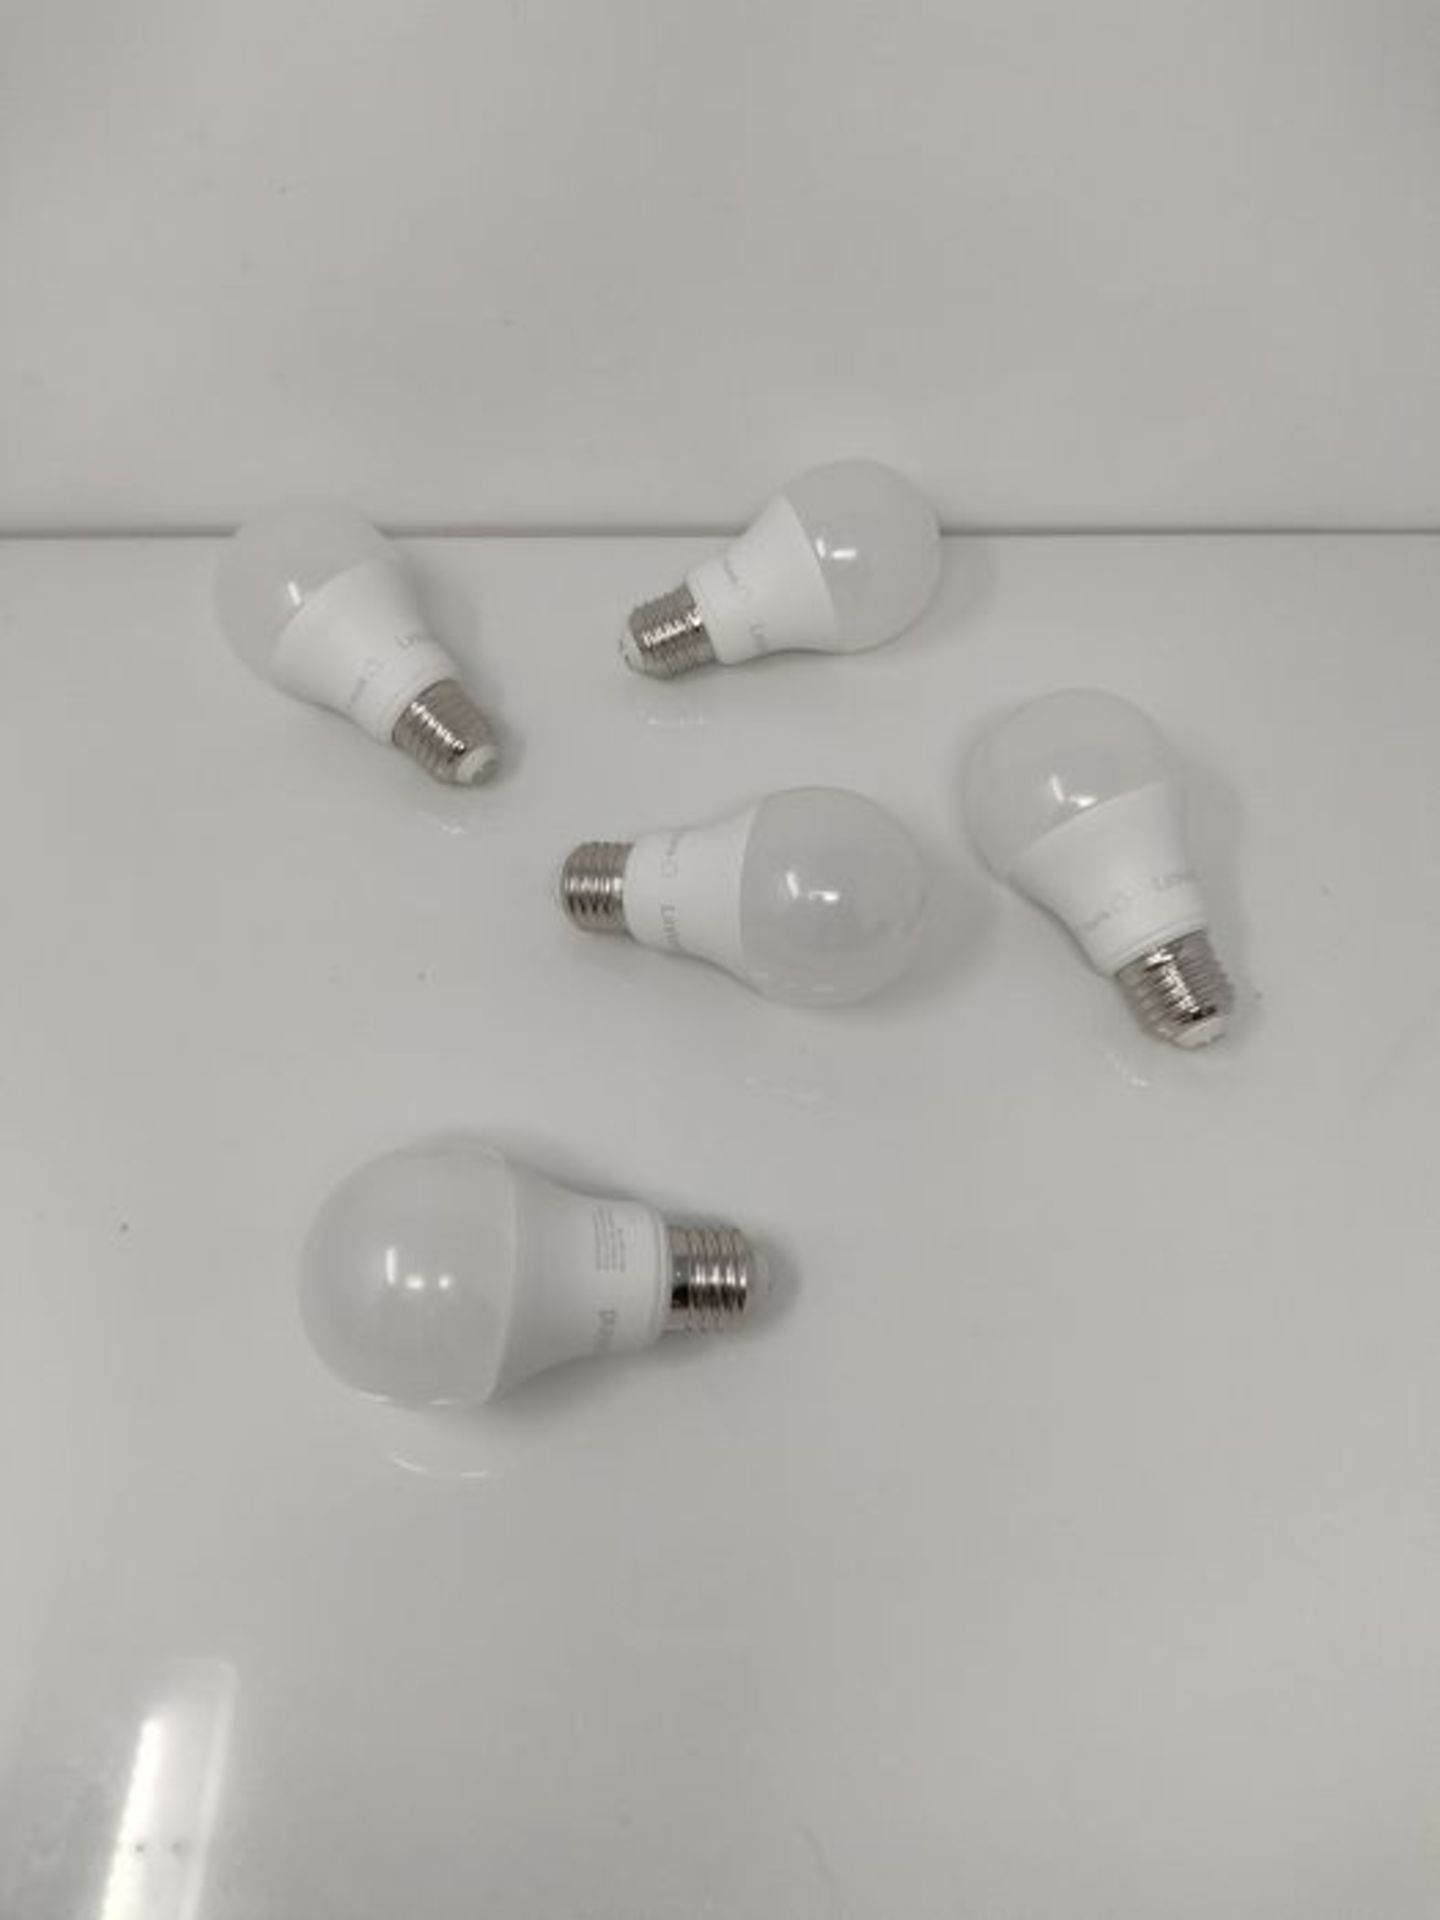 [INCOMPLETE] Linkind Dimmbar E27 LED ersetzt 75W GlÃ¼hlampe, 4000K NeutralweiÃx 10 - Image 3 of 3